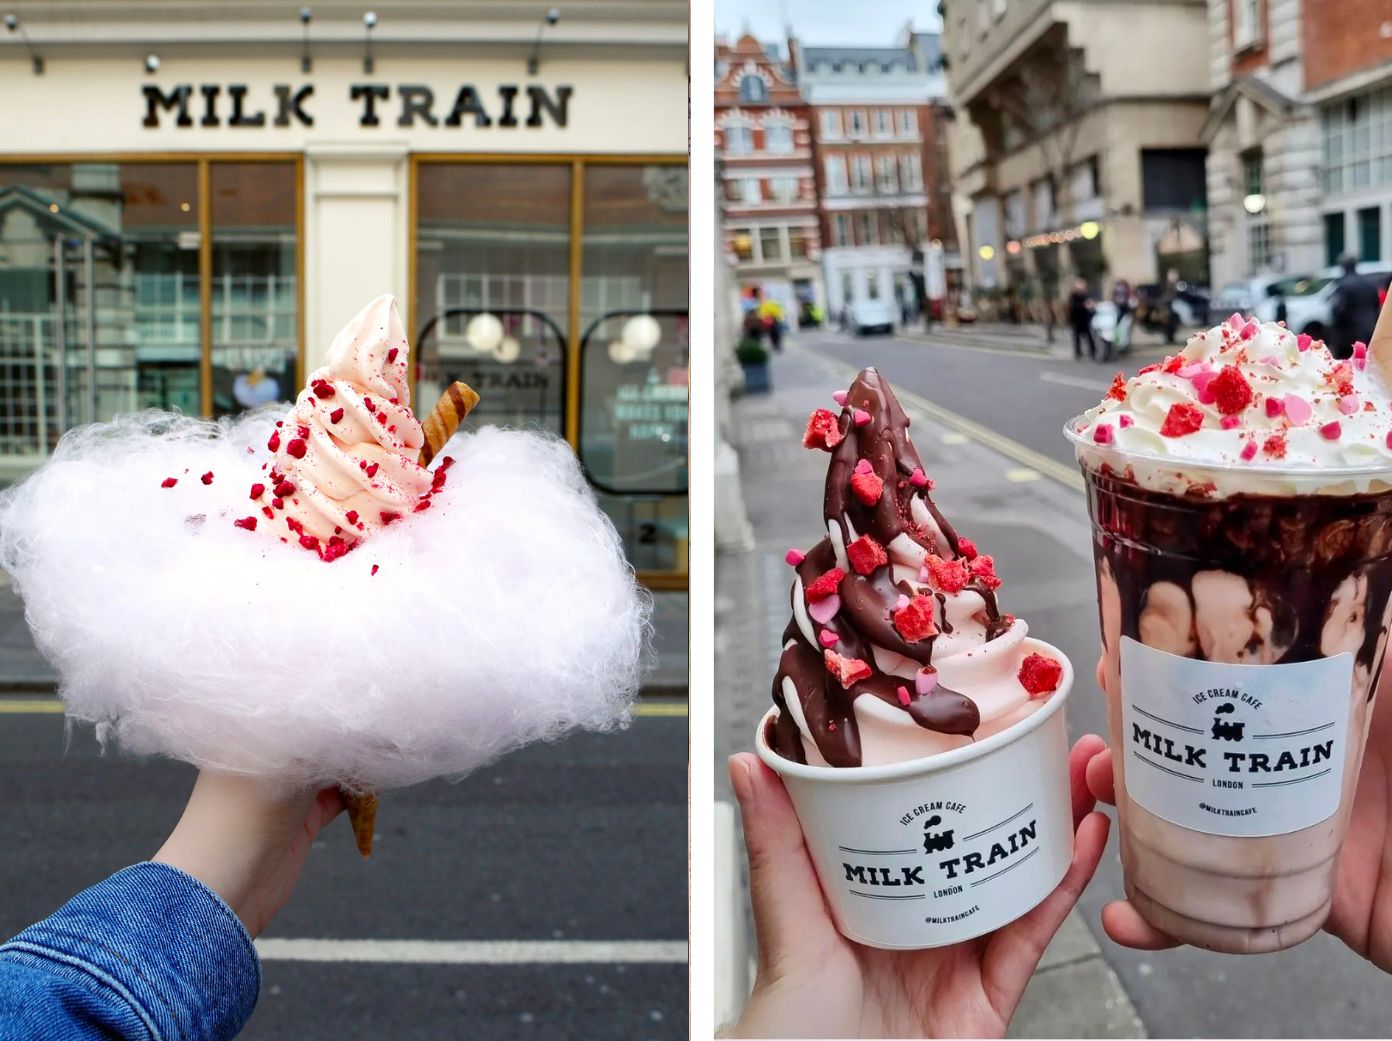 Milk Train Best ice cream in london